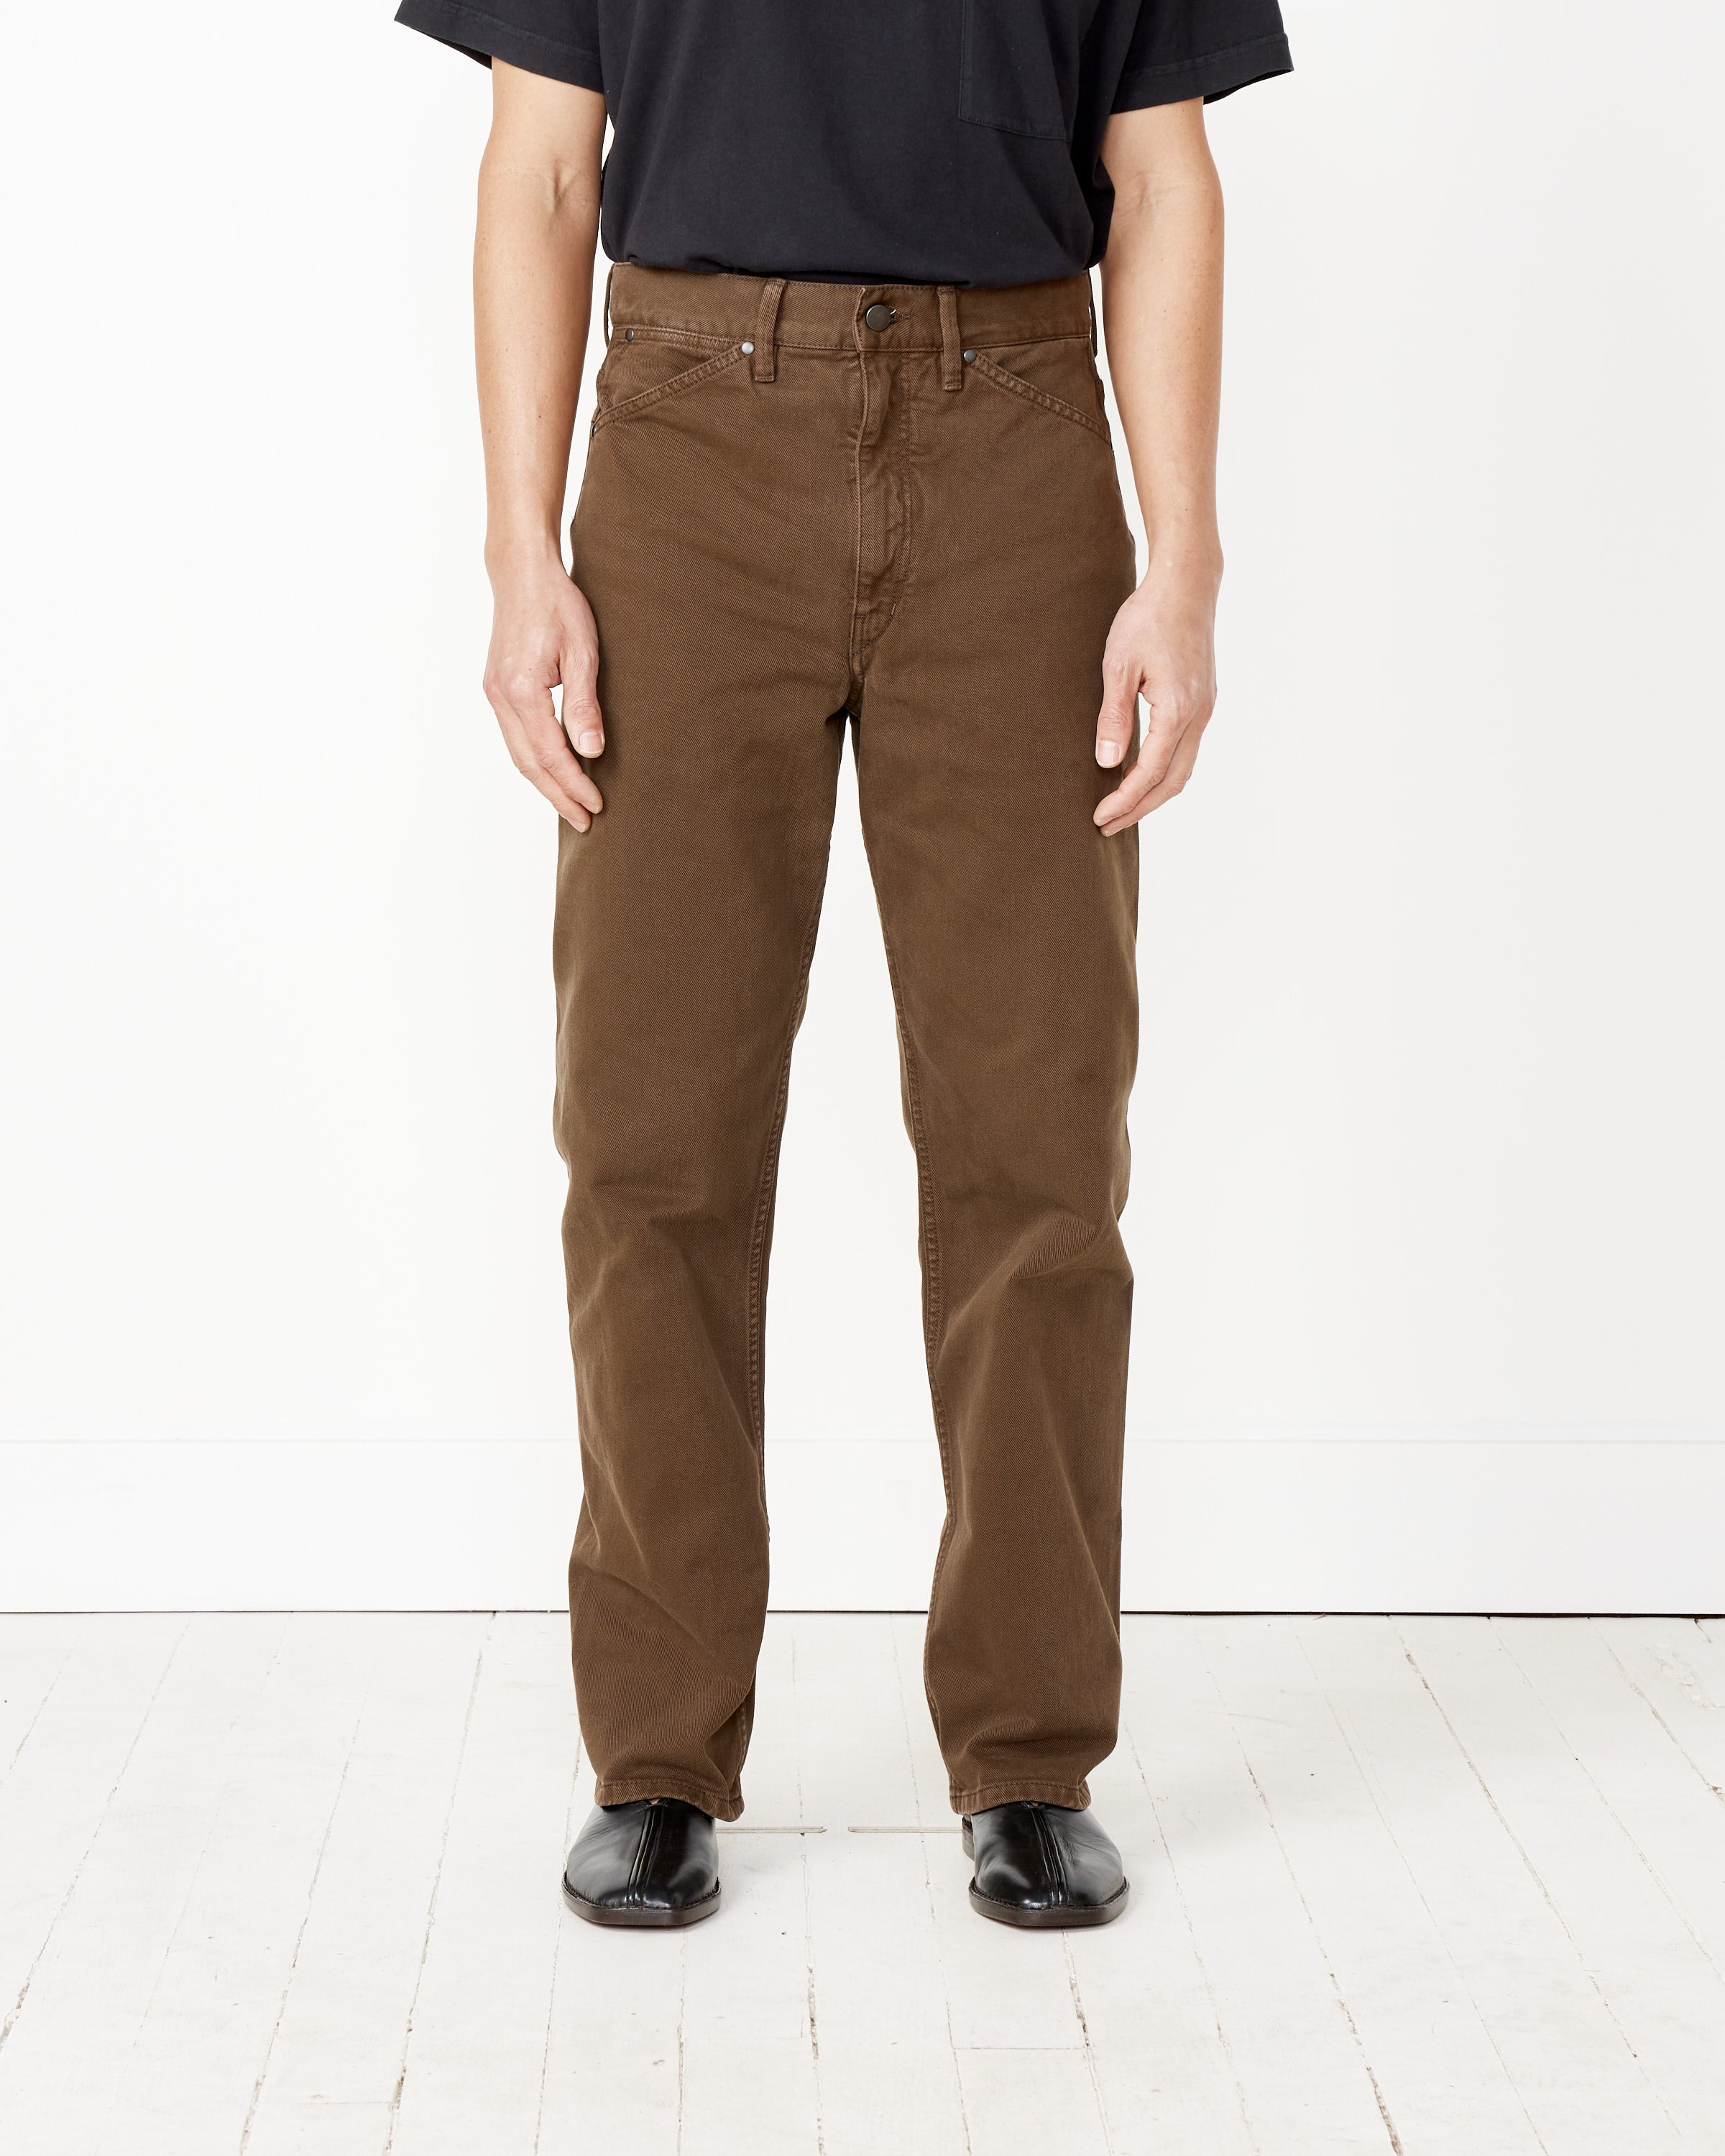 Seamless Jeans in Dark Brown – Mohawk General Store